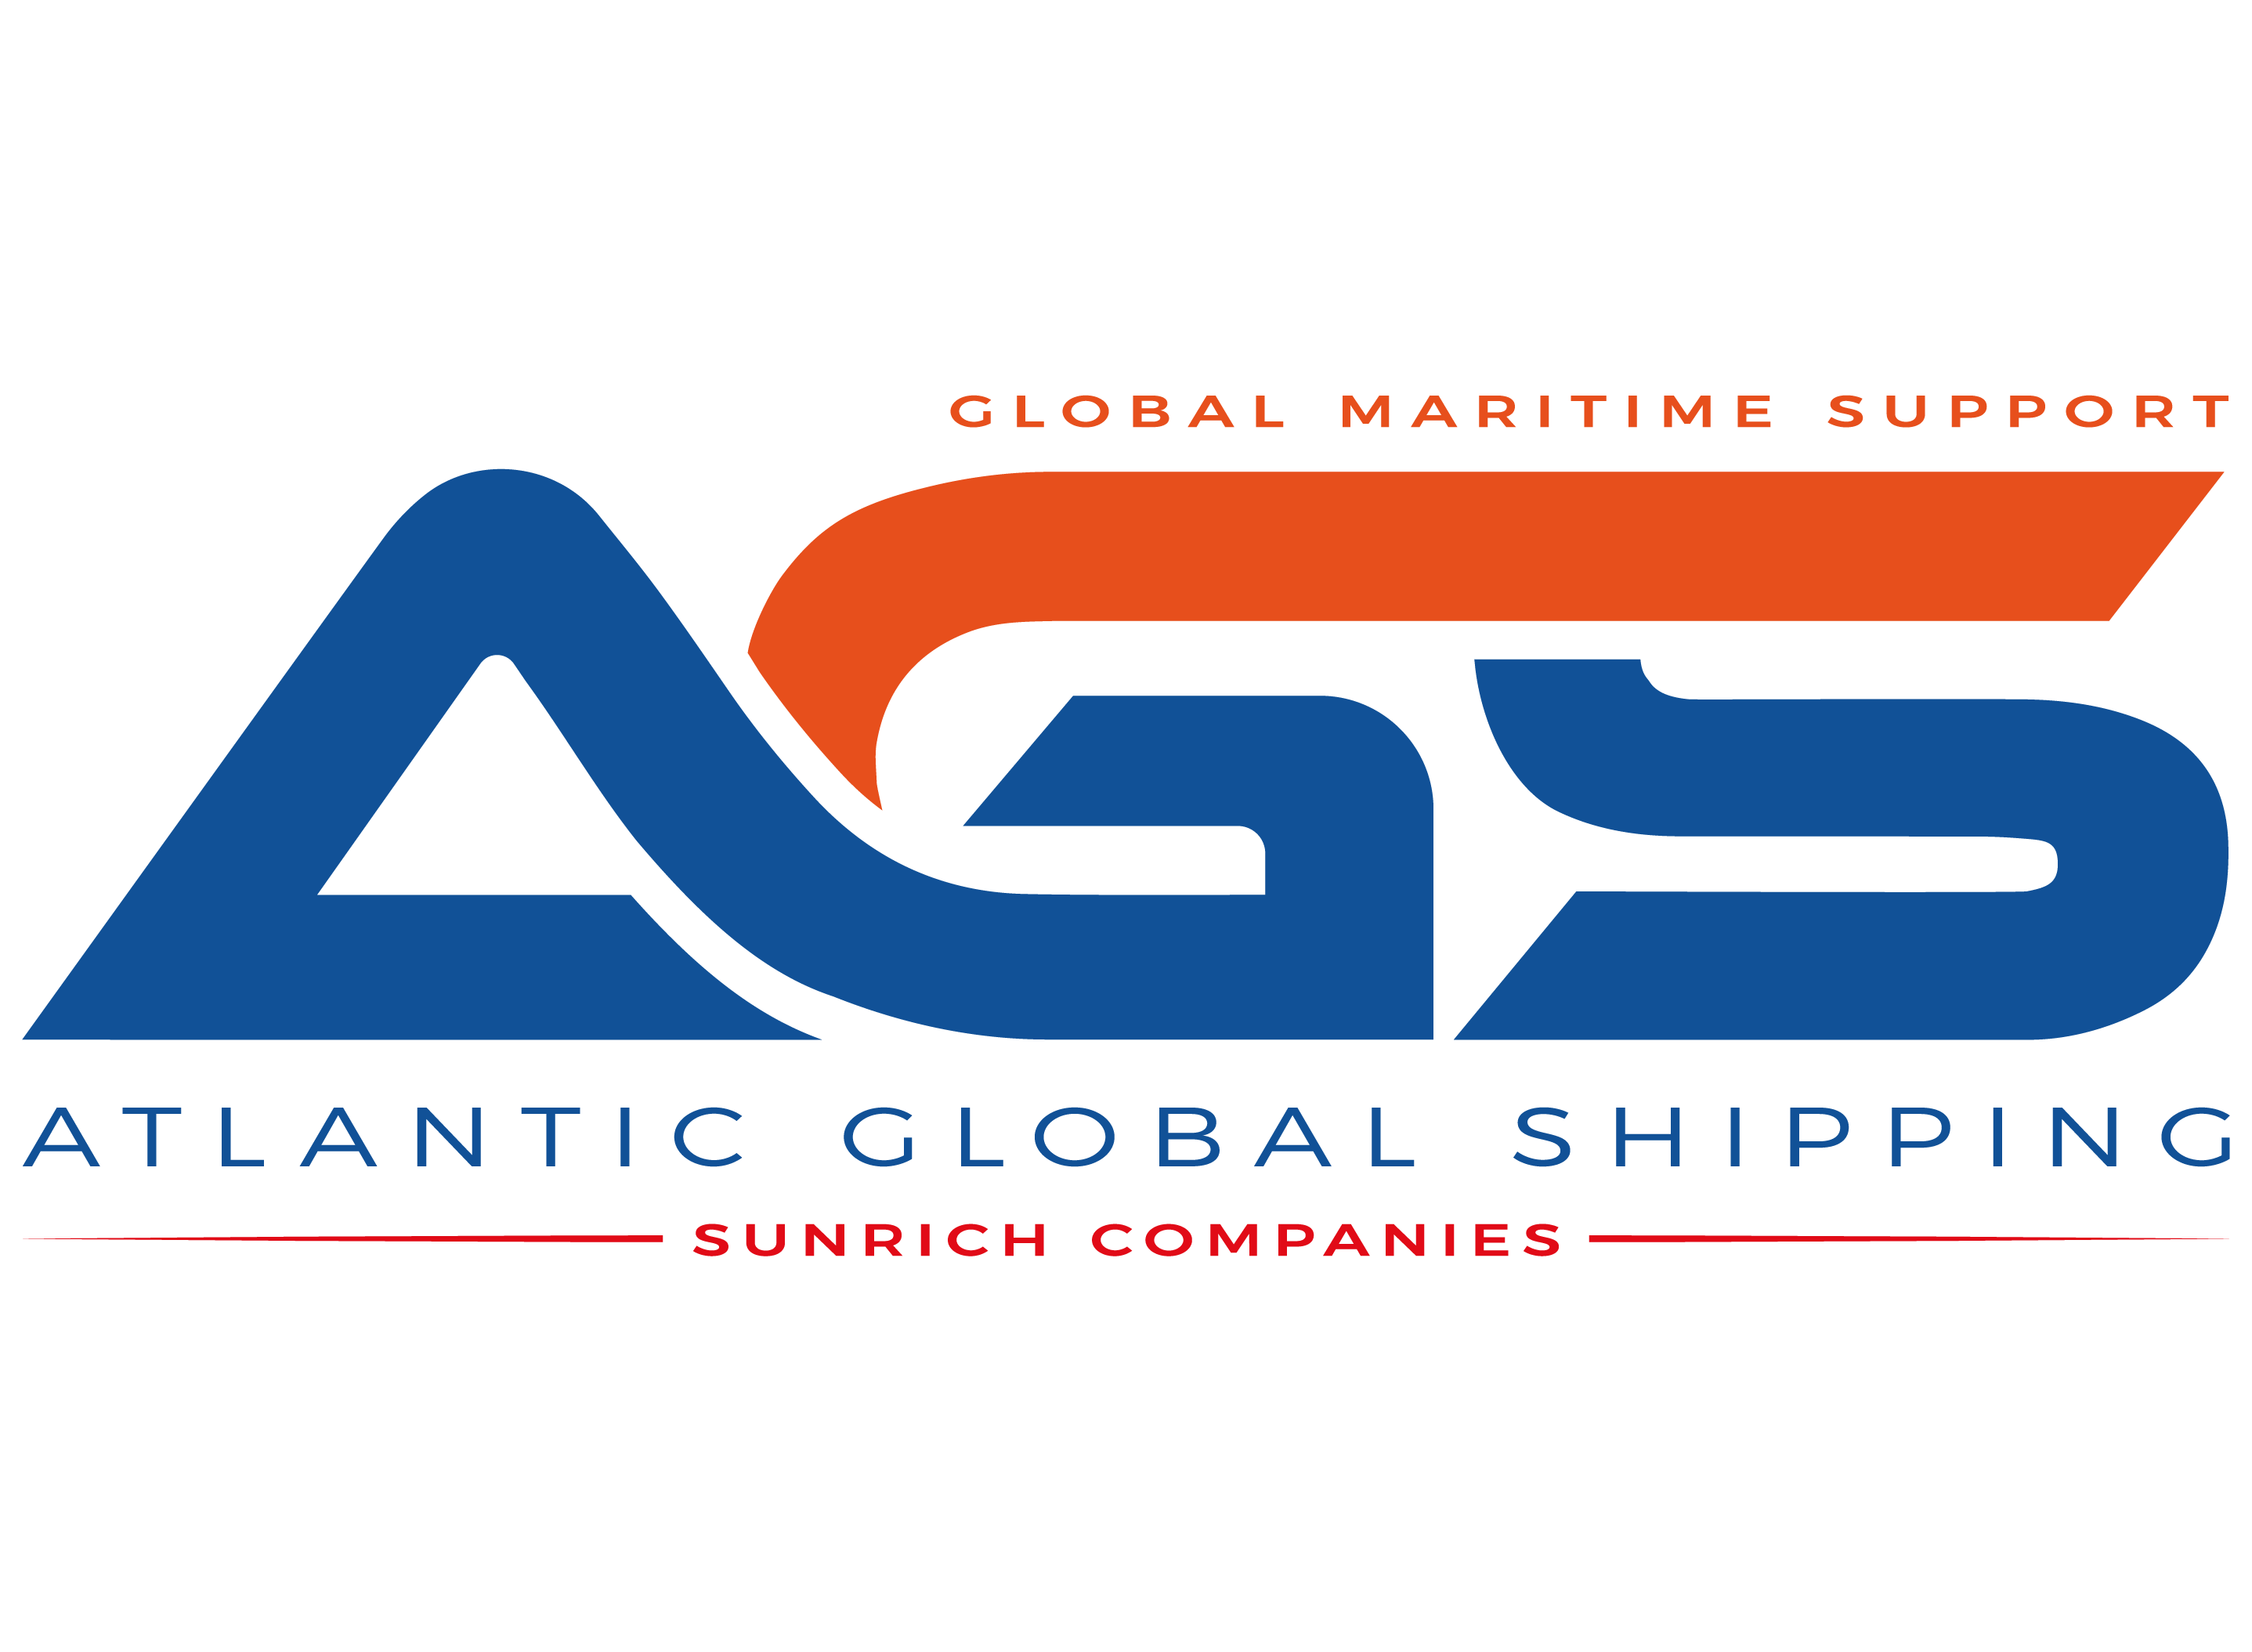 Atlantic Global Shipping